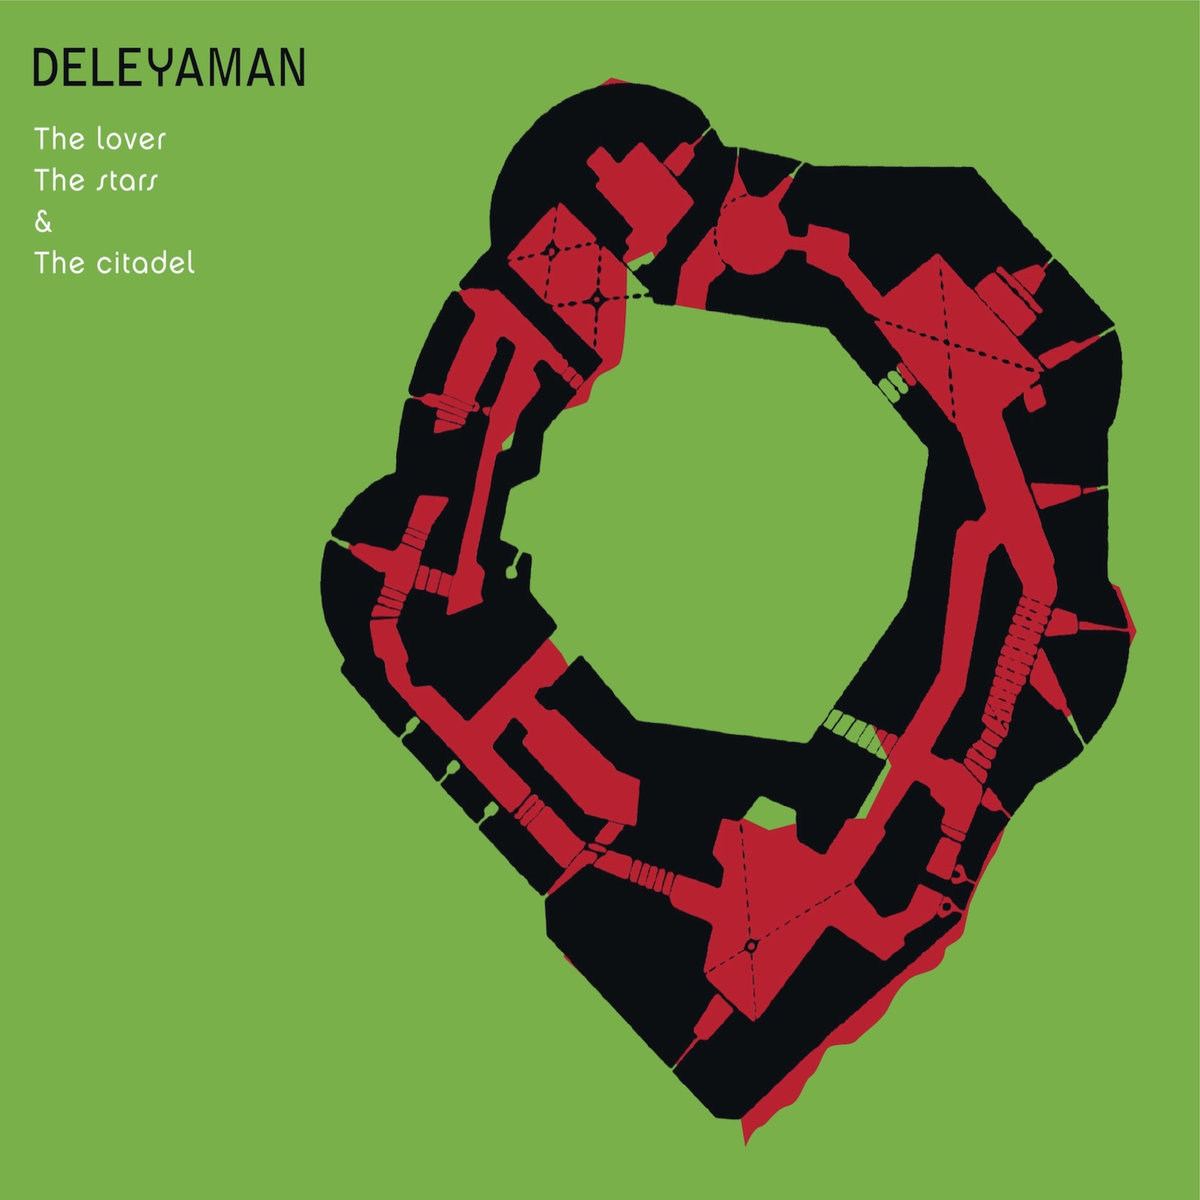 Deleyaman, étrangeté poétique